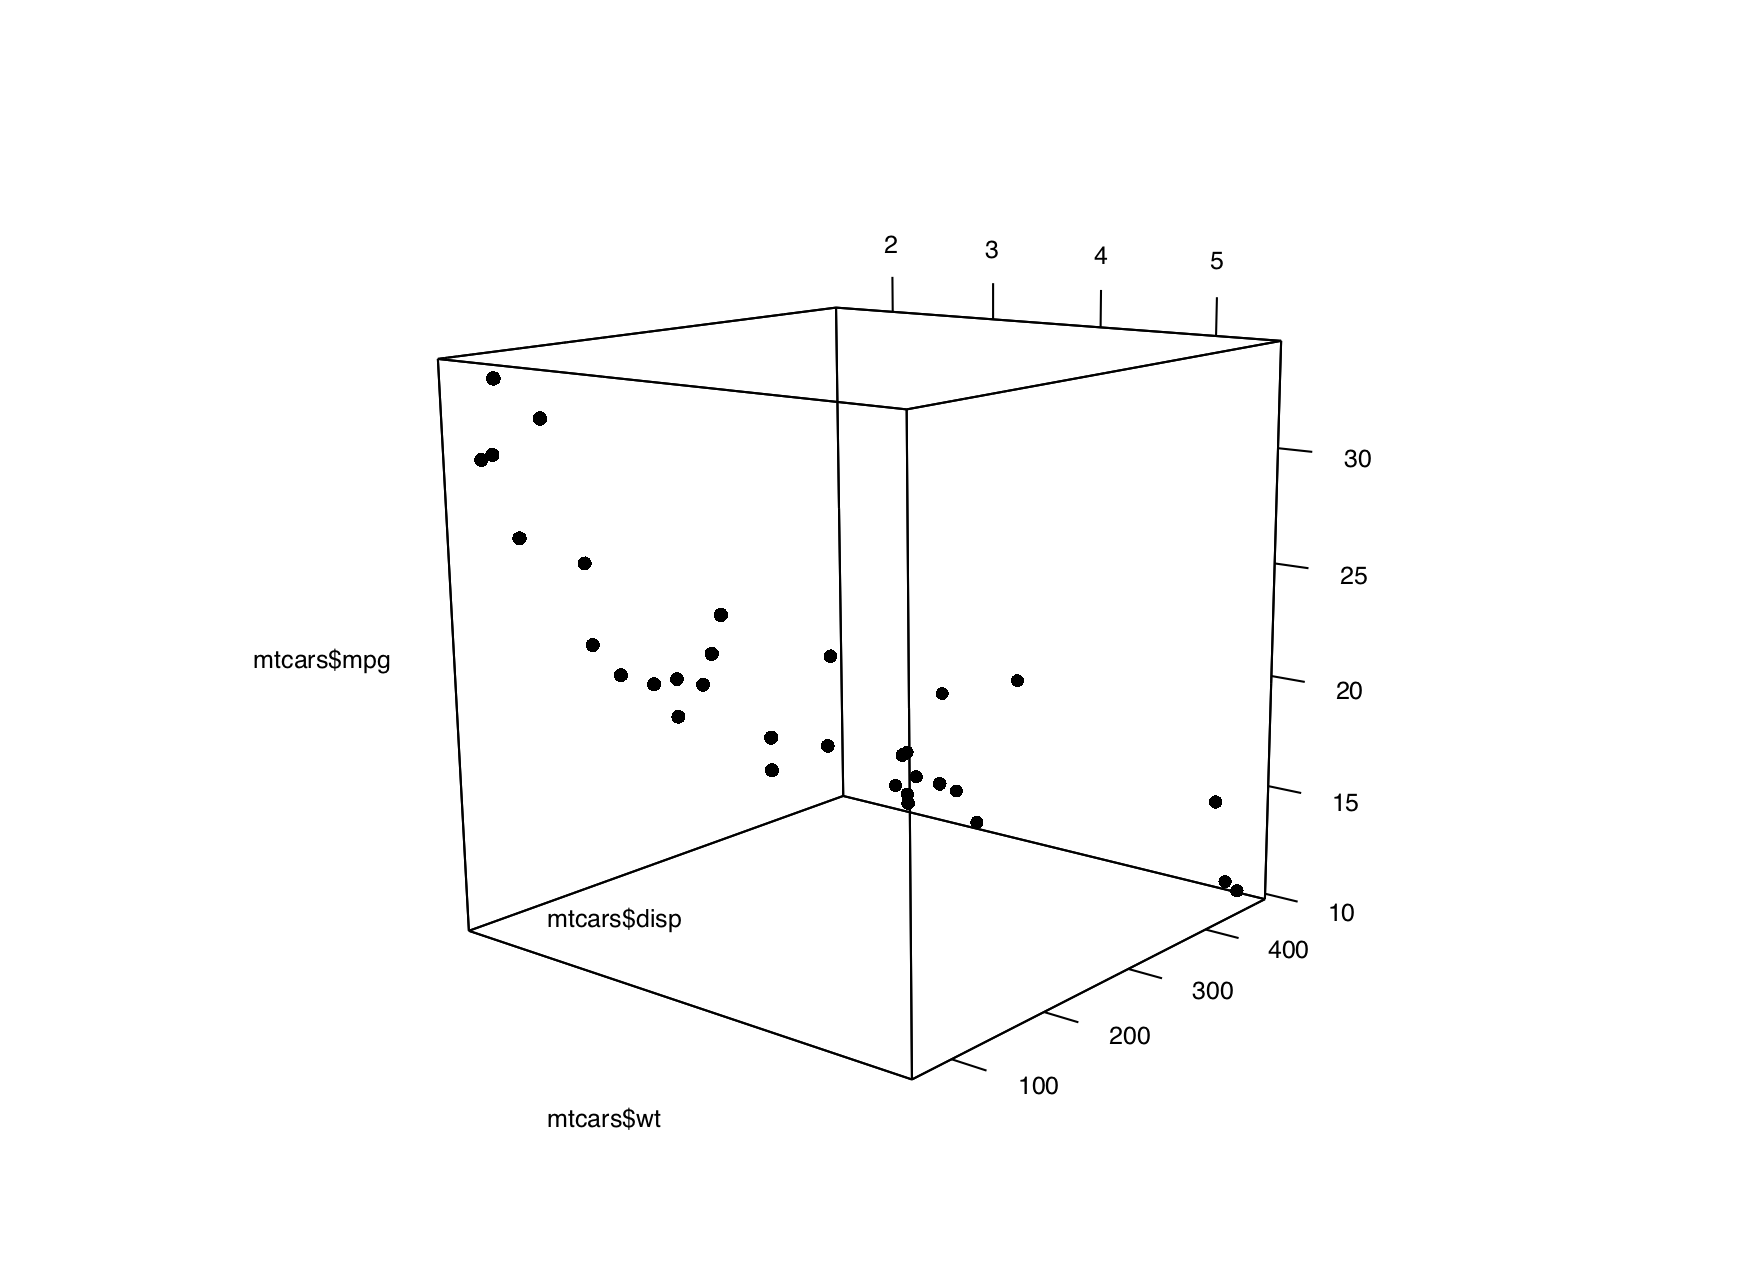 A 3D scatter plot